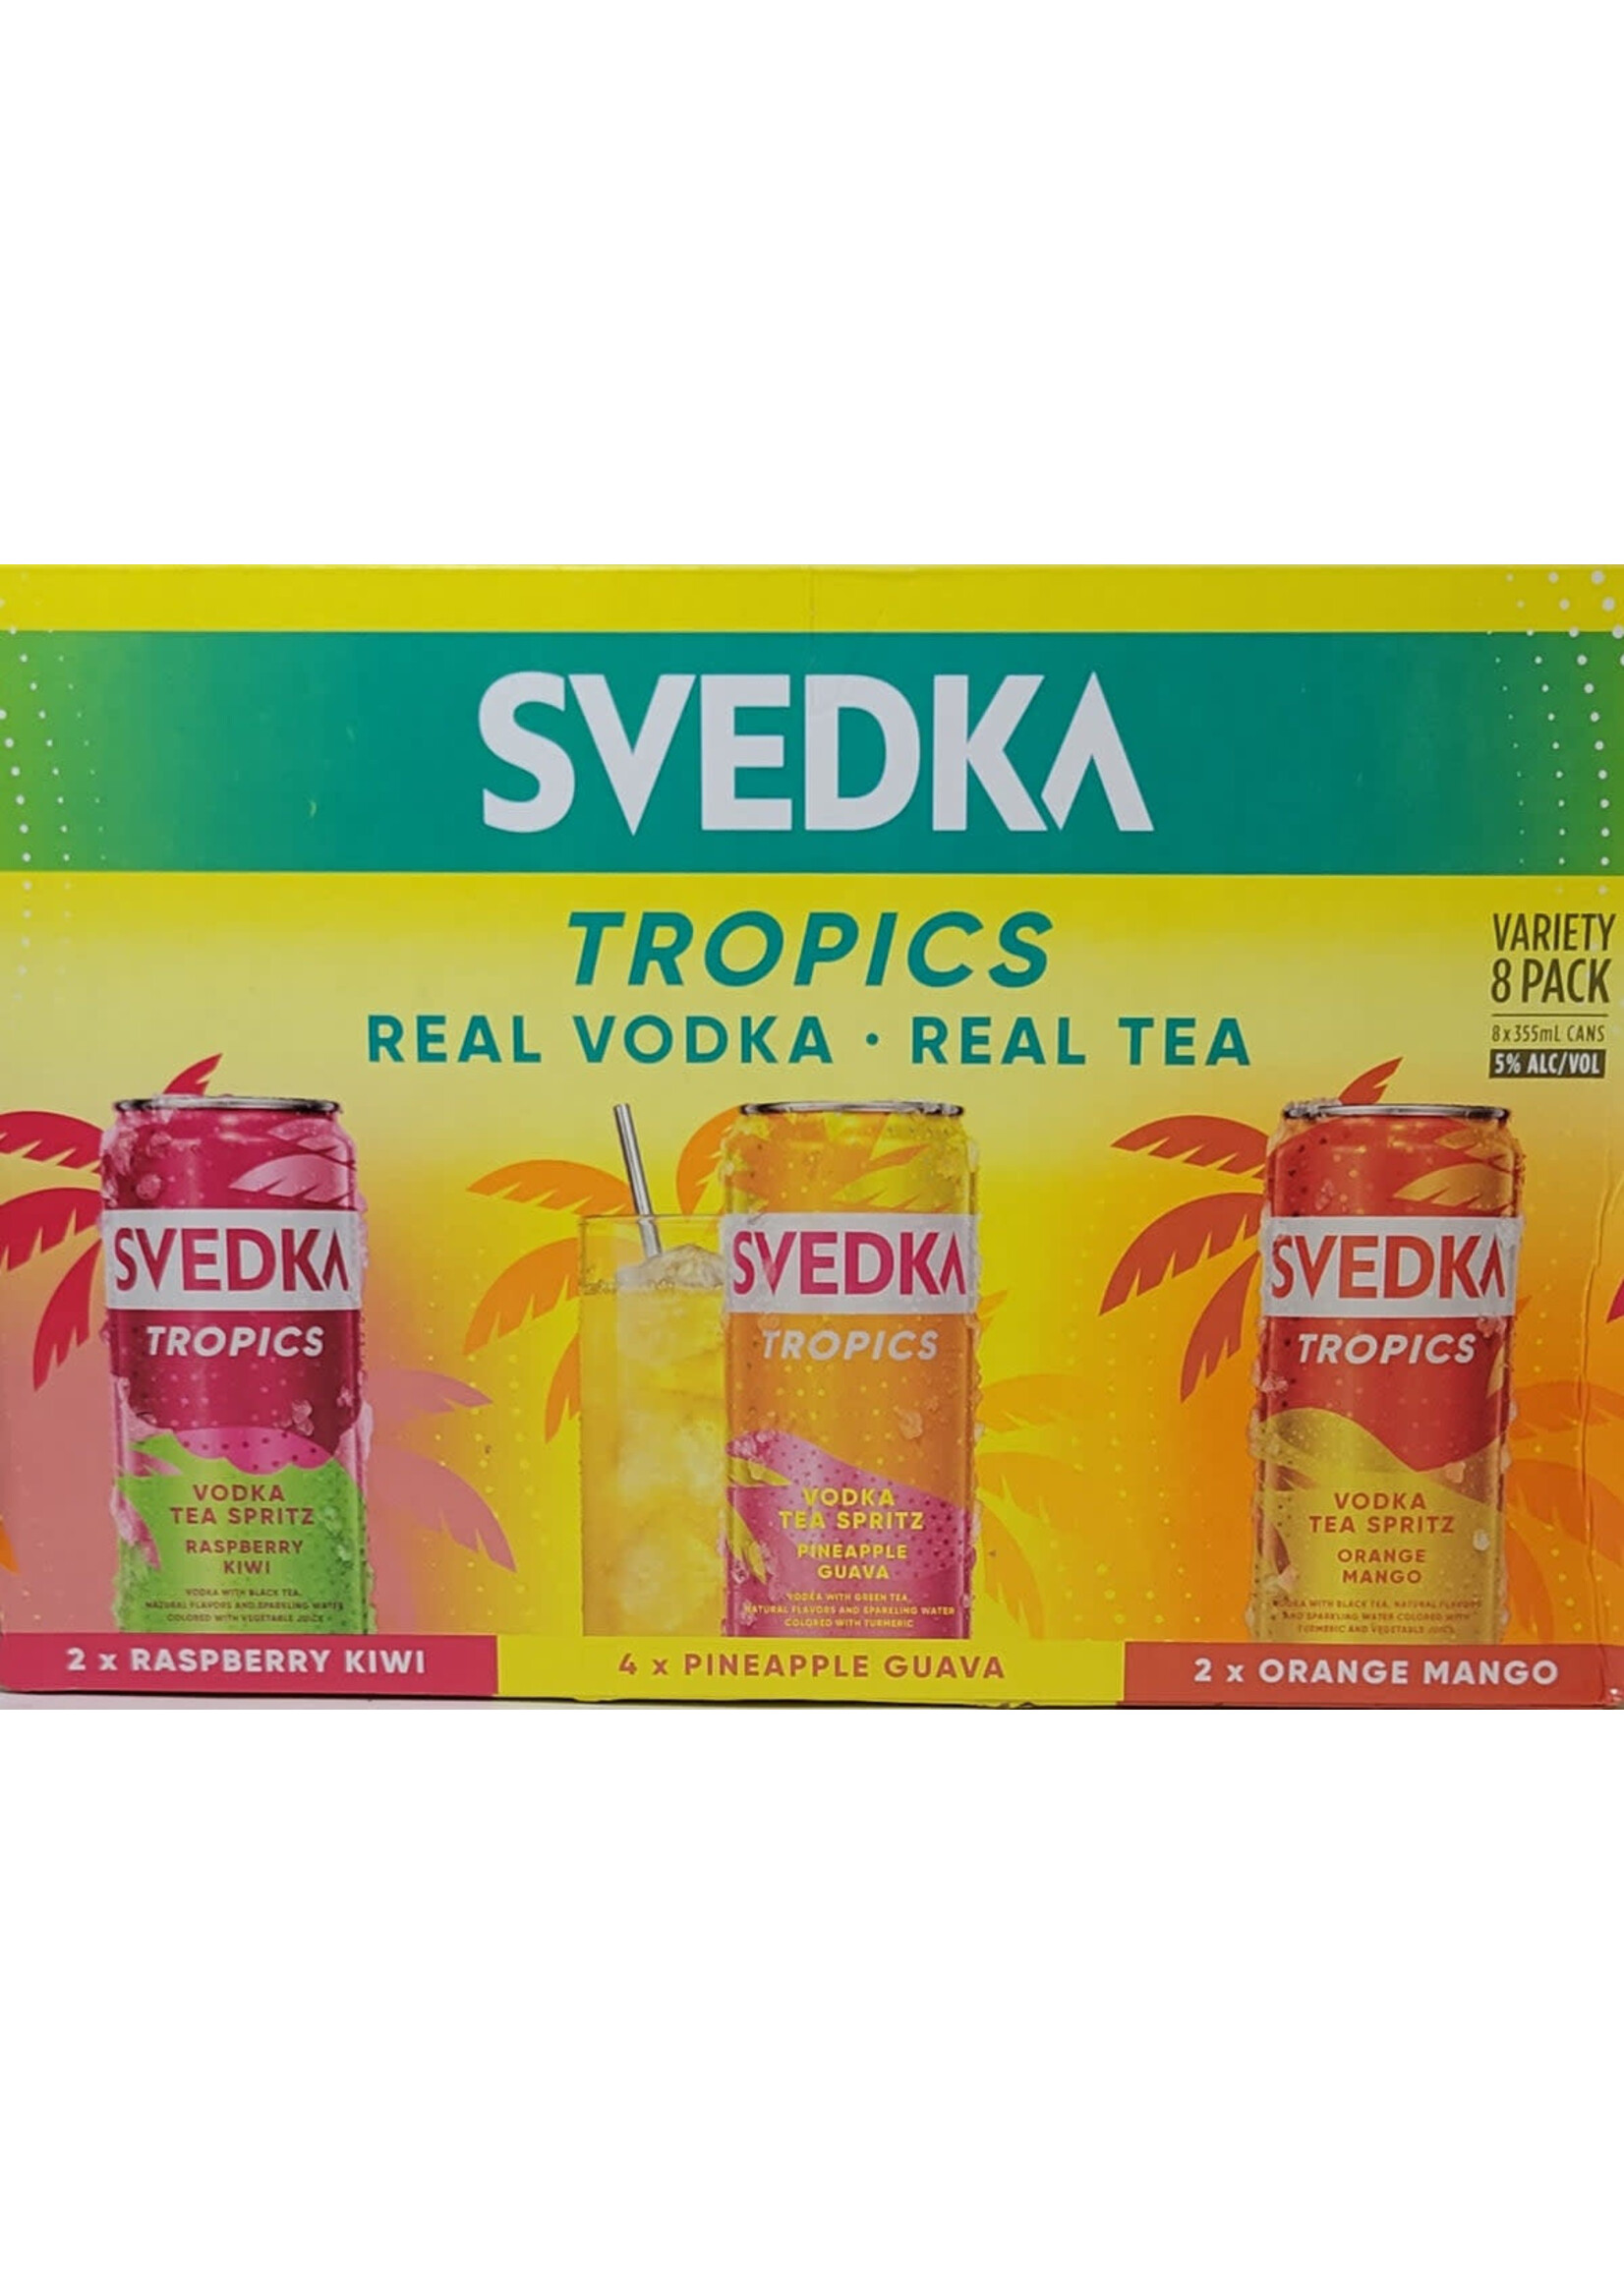 Svedka Vodka Svedka RTD Tropics Vodka Tea Spritz Cocktail Combo 2-Orange Mango, 3- Pineapple Guava & Raspberry Kiwi 10Proof 8Pk 12oz Cans